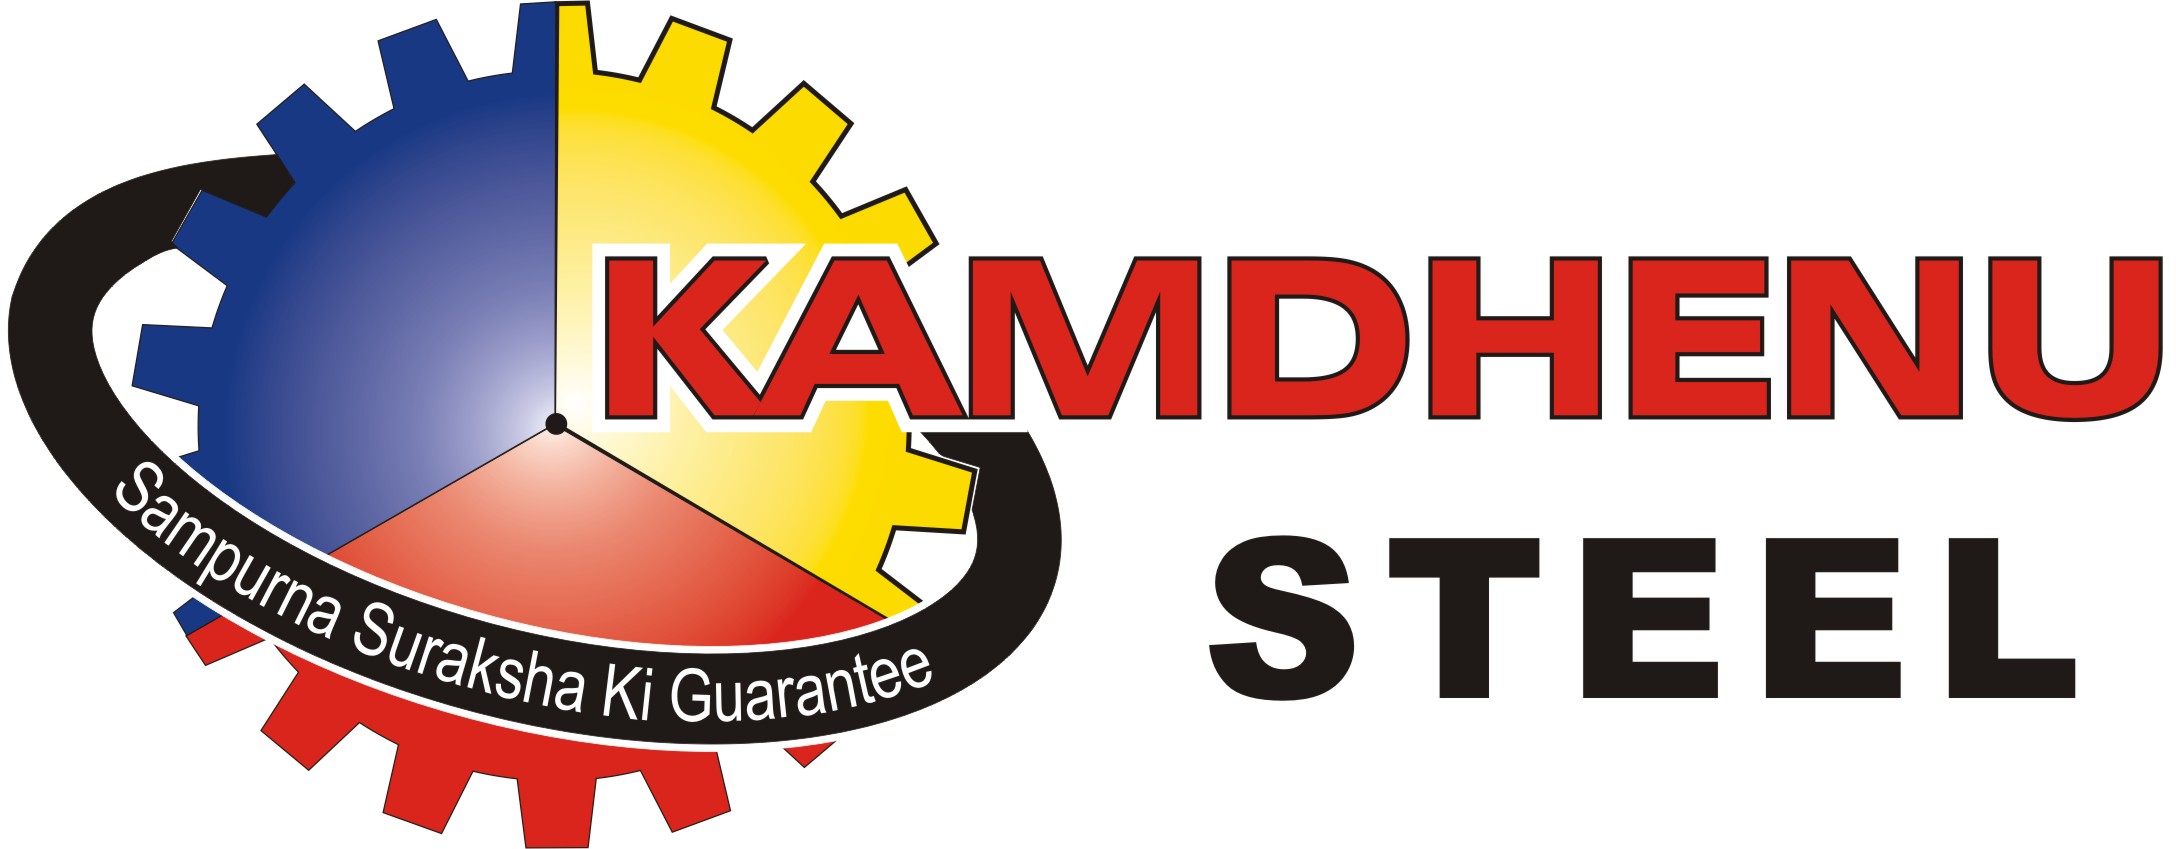 Kamdhenu Foods Company Profile, information, investors, valuation & Funding